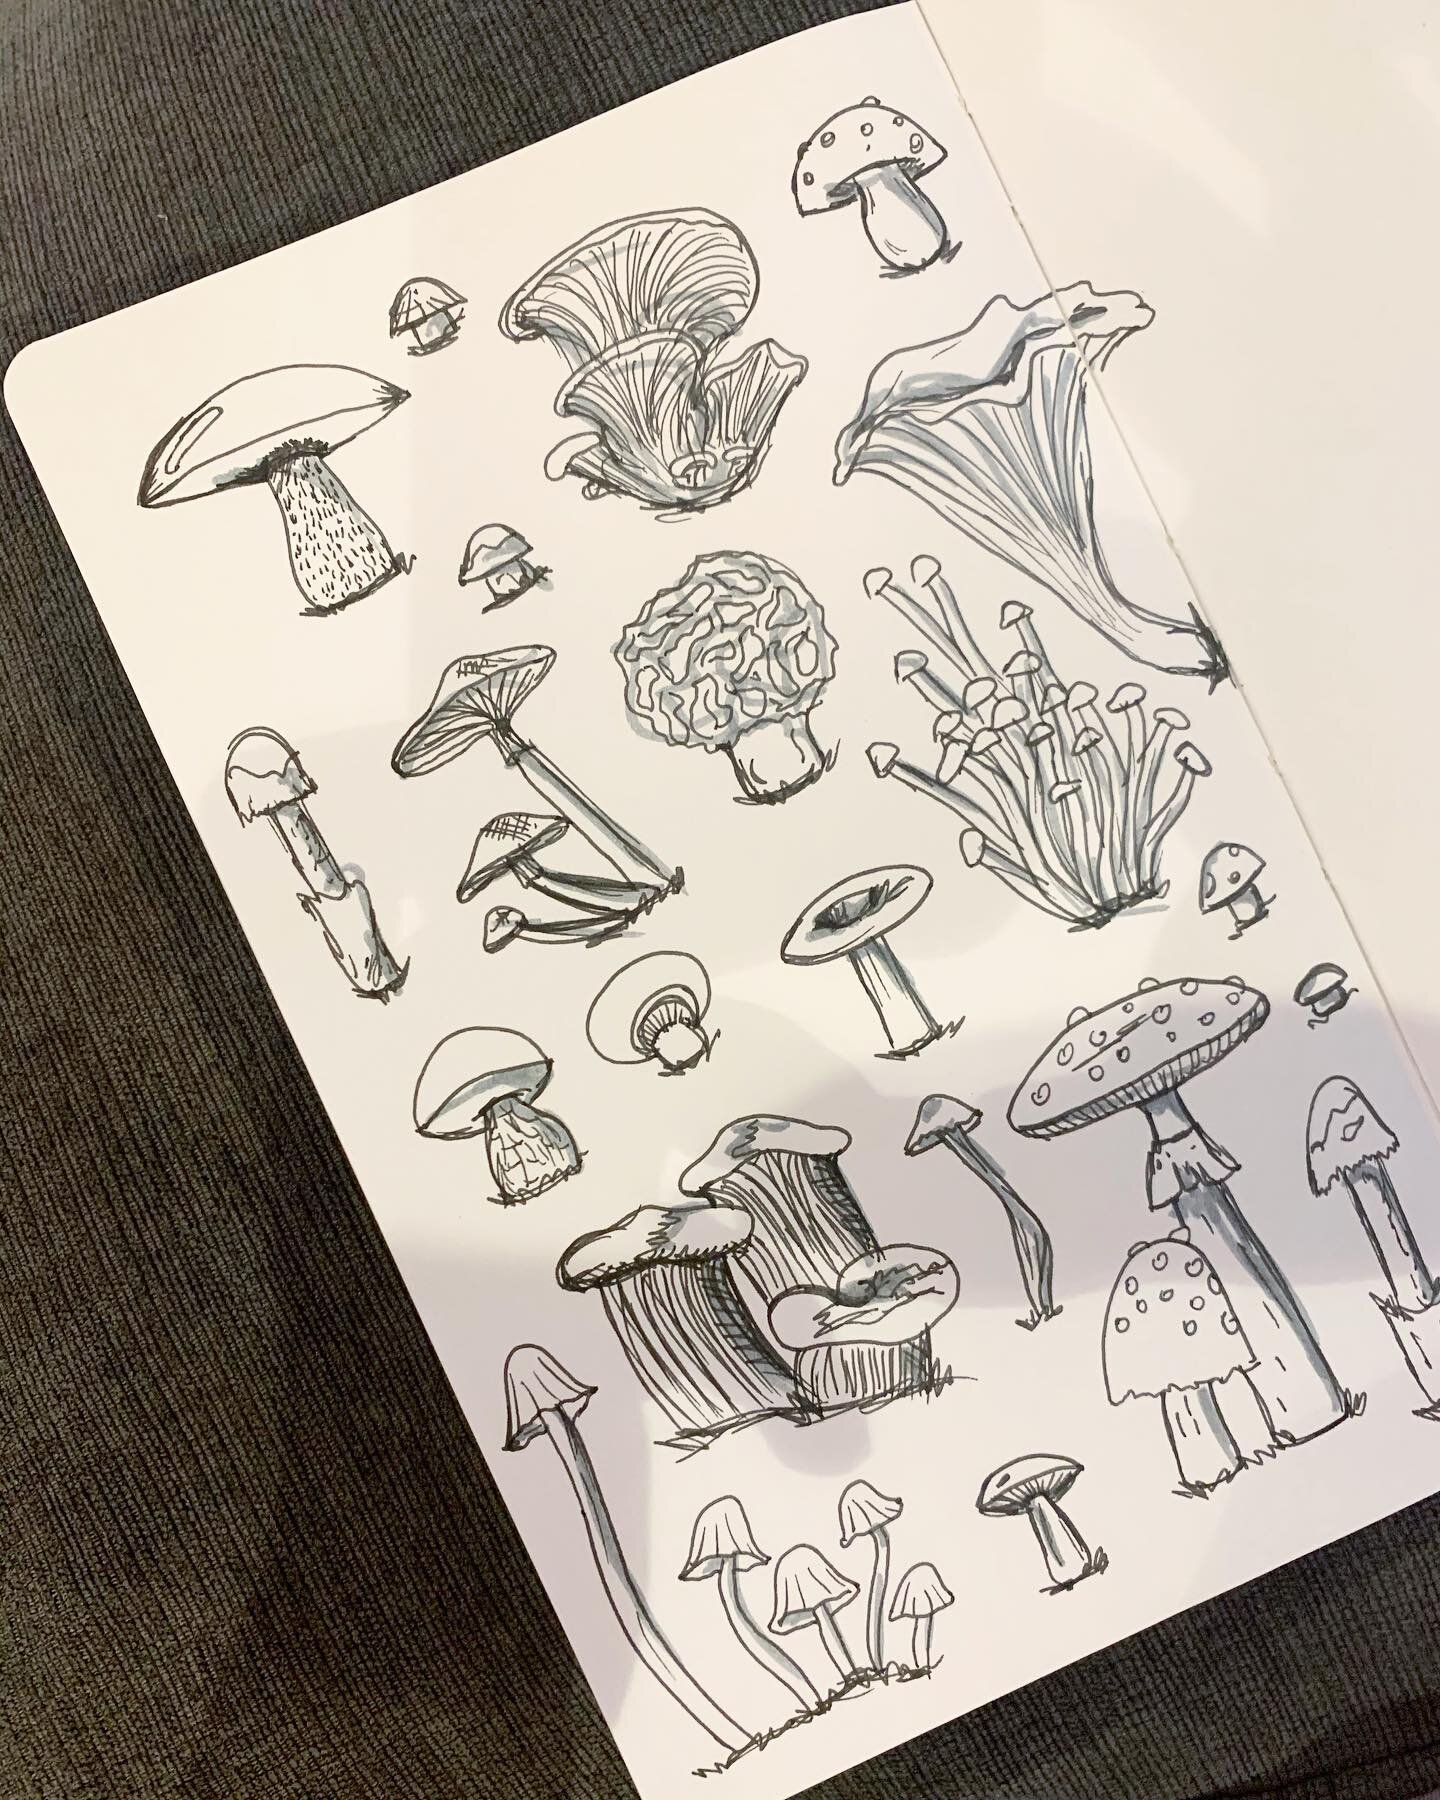 Anyone else thinking about buying a mushroom growing kit? 

#sketch #sketching #sketchbook #mushrooms #mushroomsofinstagram #mushroomart #mushroom #fabercastell #inkdrawing #ink #design #madebylpoole #denik @shopdenik